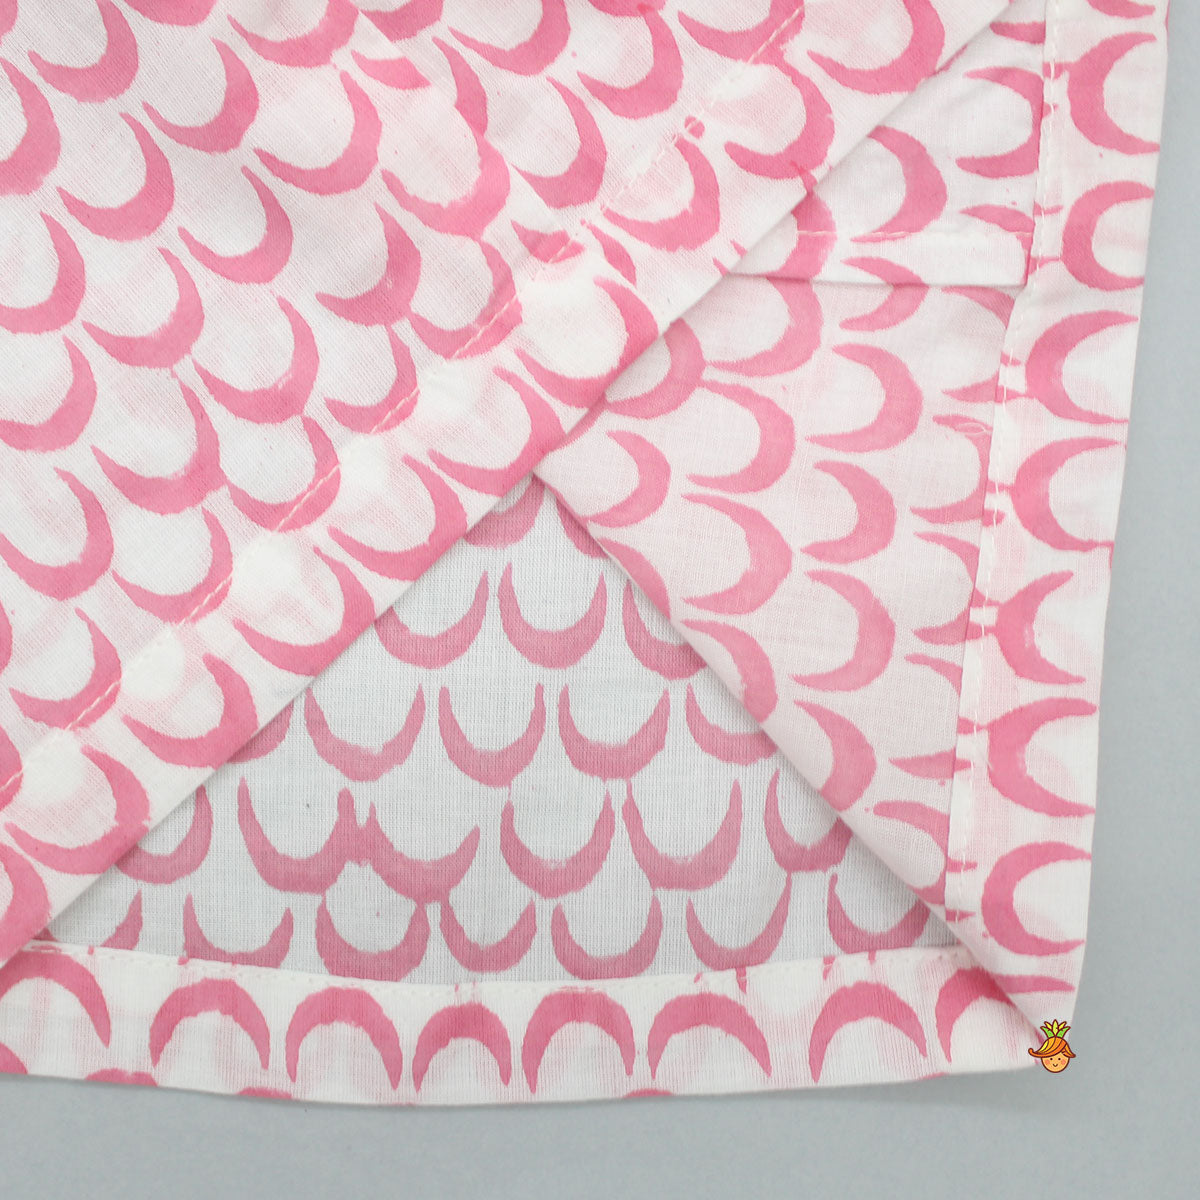 Moon Printed Pink Top And Pyjama